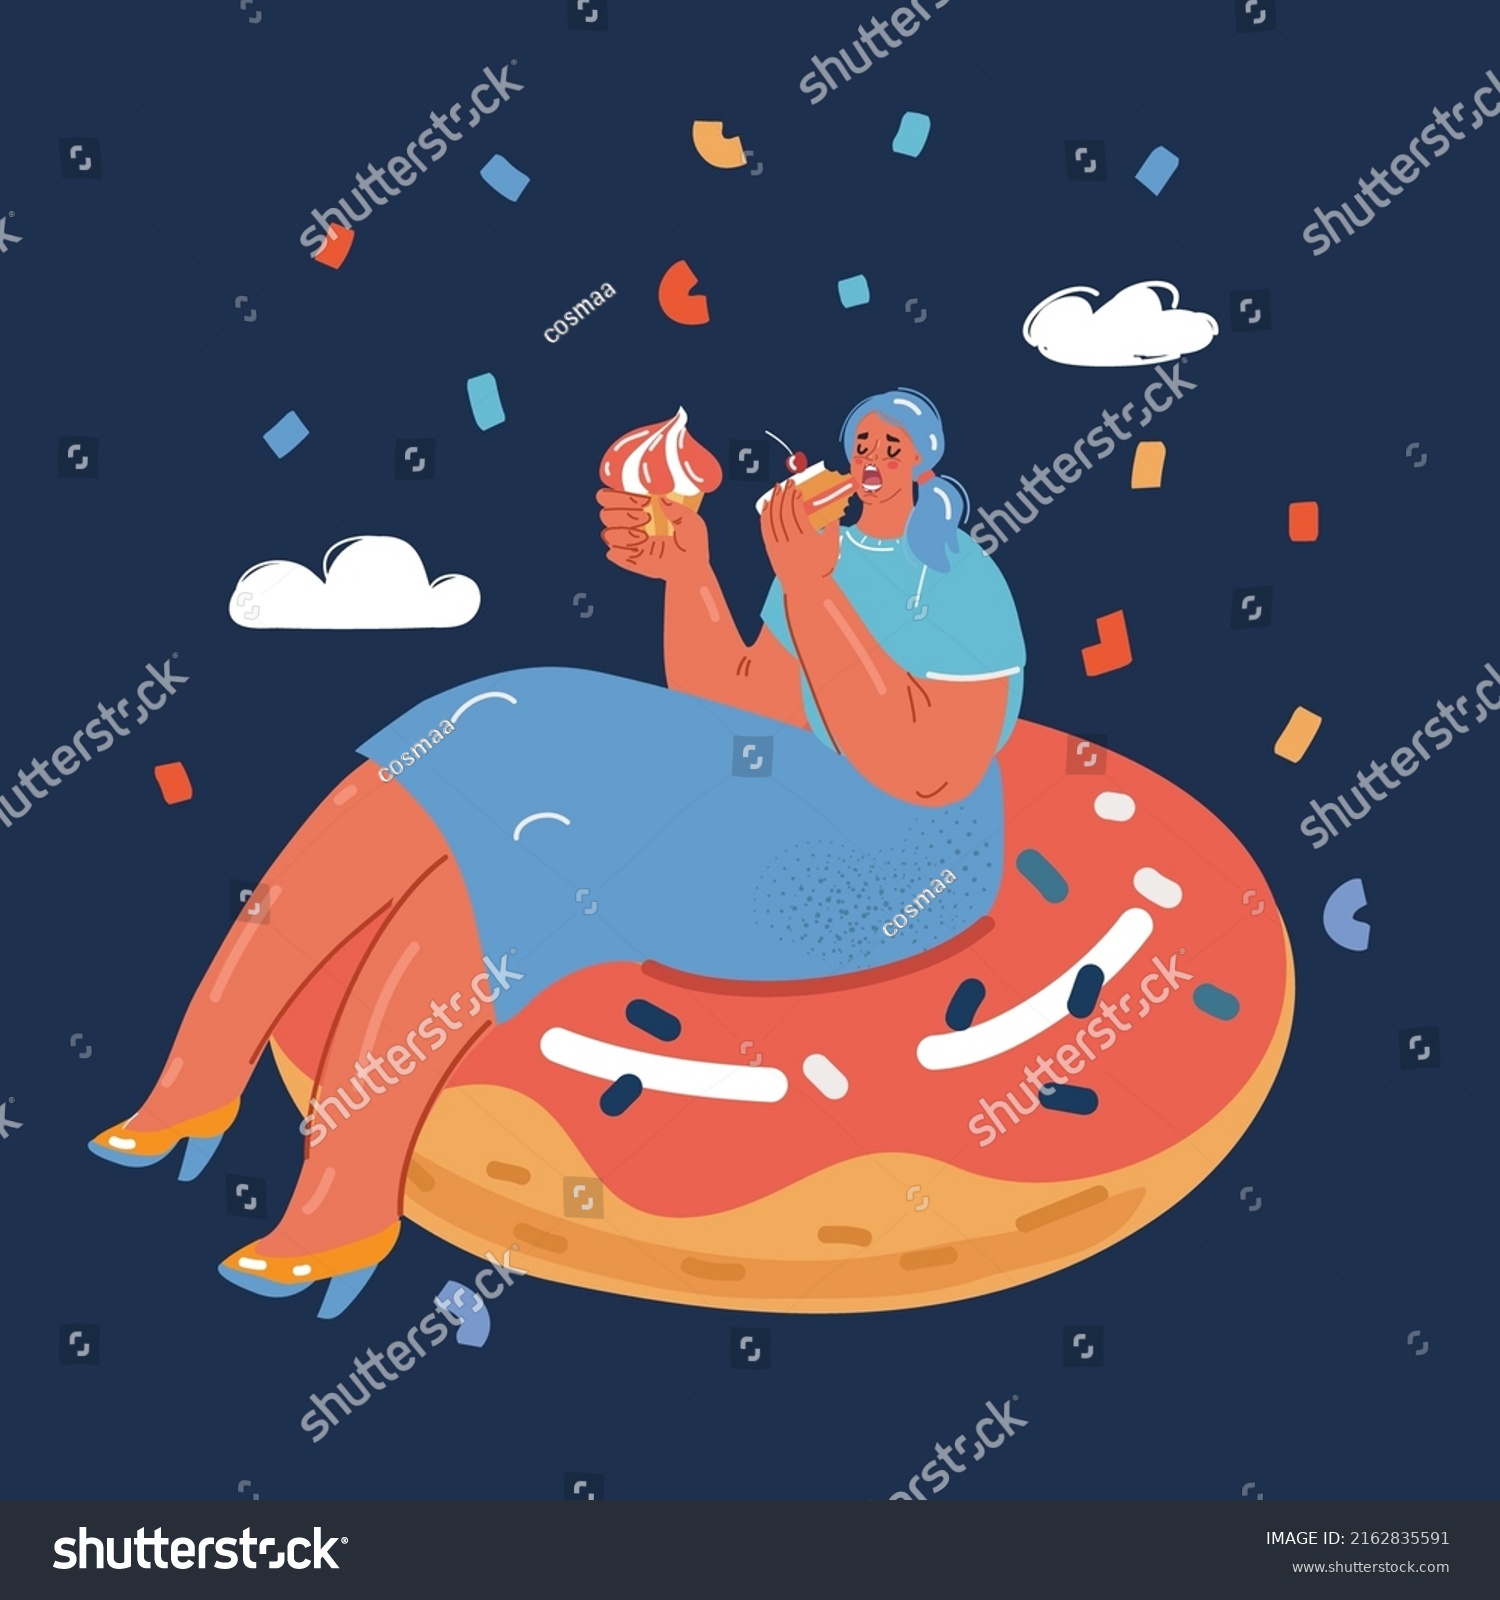 SVG of Cartoon vector illustration of lady eating cake sitting at big giant donut over dark backround. svg